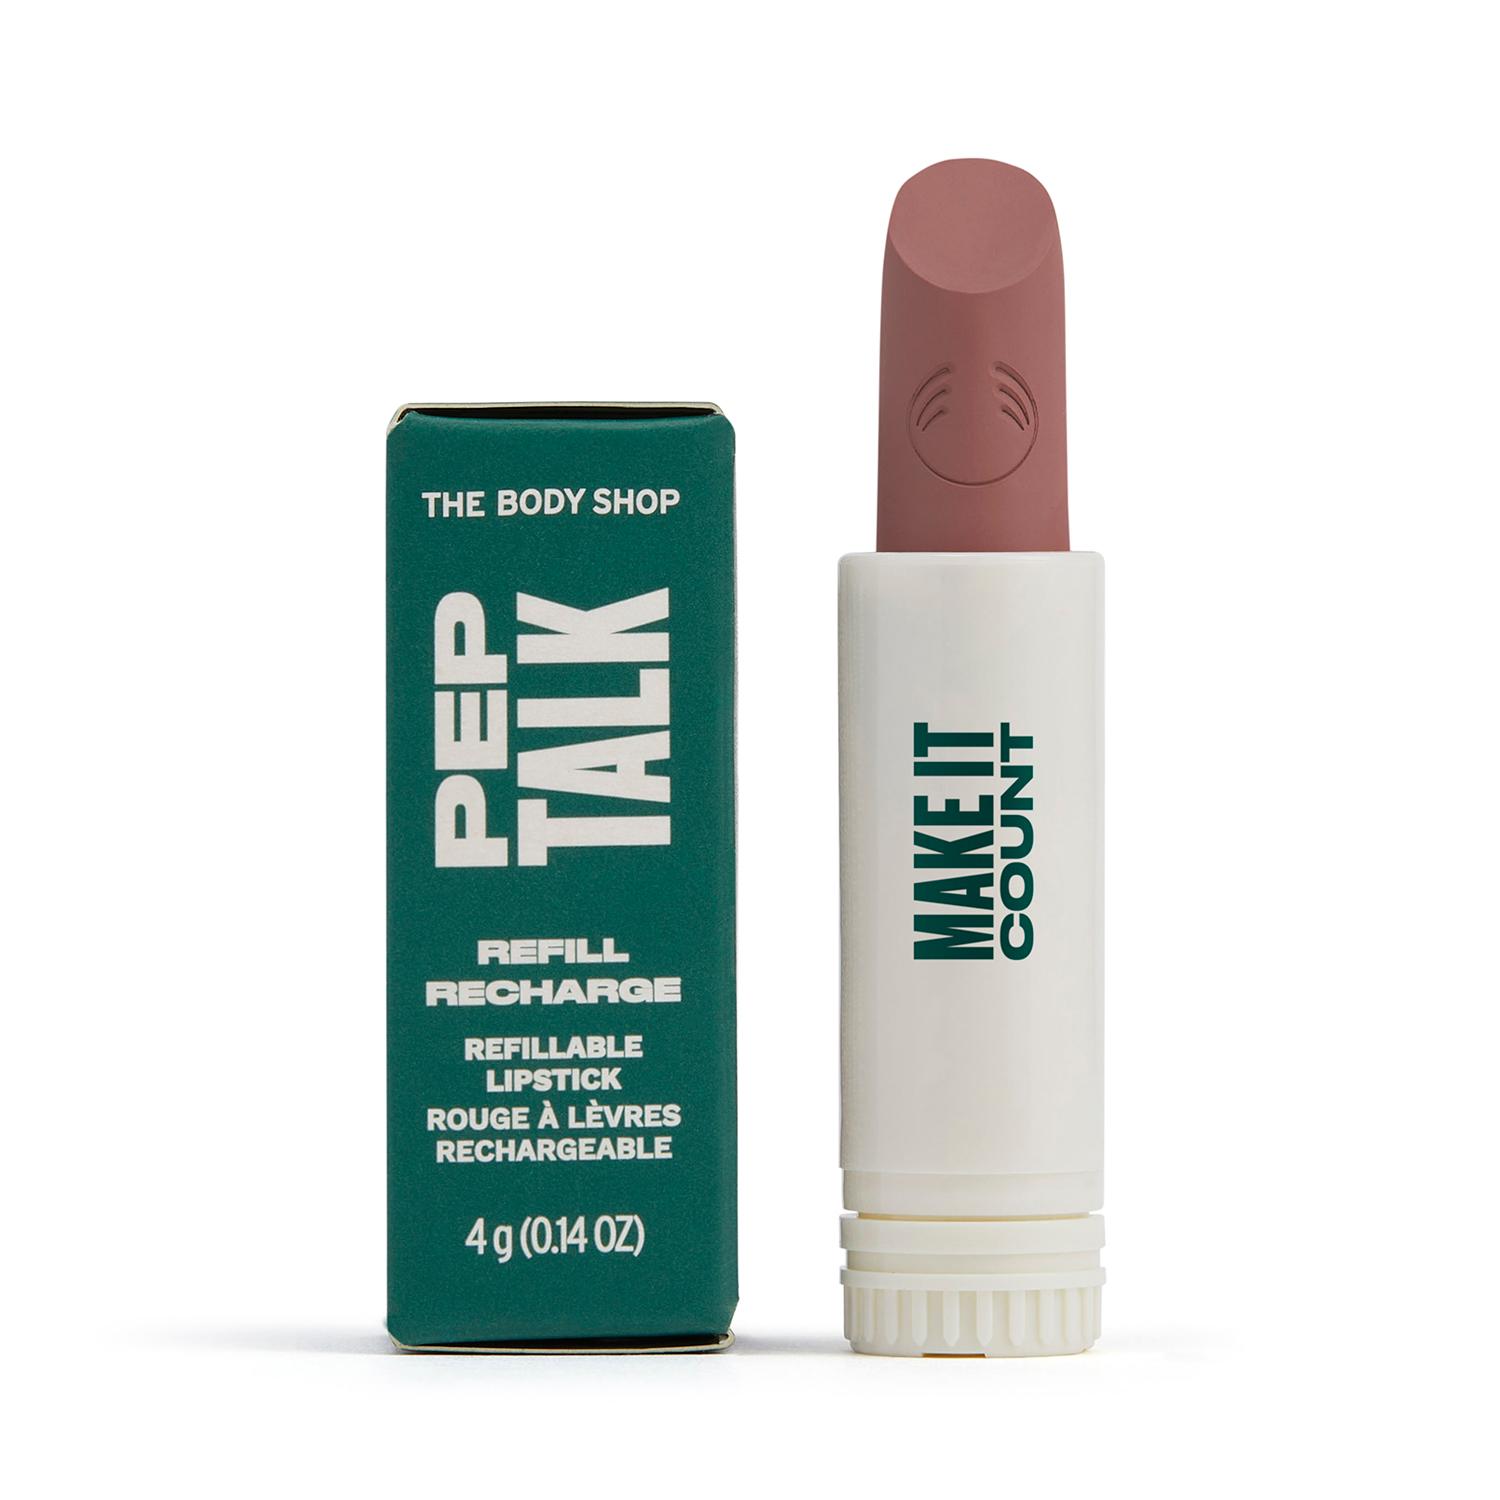 The Body Shop | The Body Shop Peptalk Lipstick Bullet Refill - Make It Count (4 g)